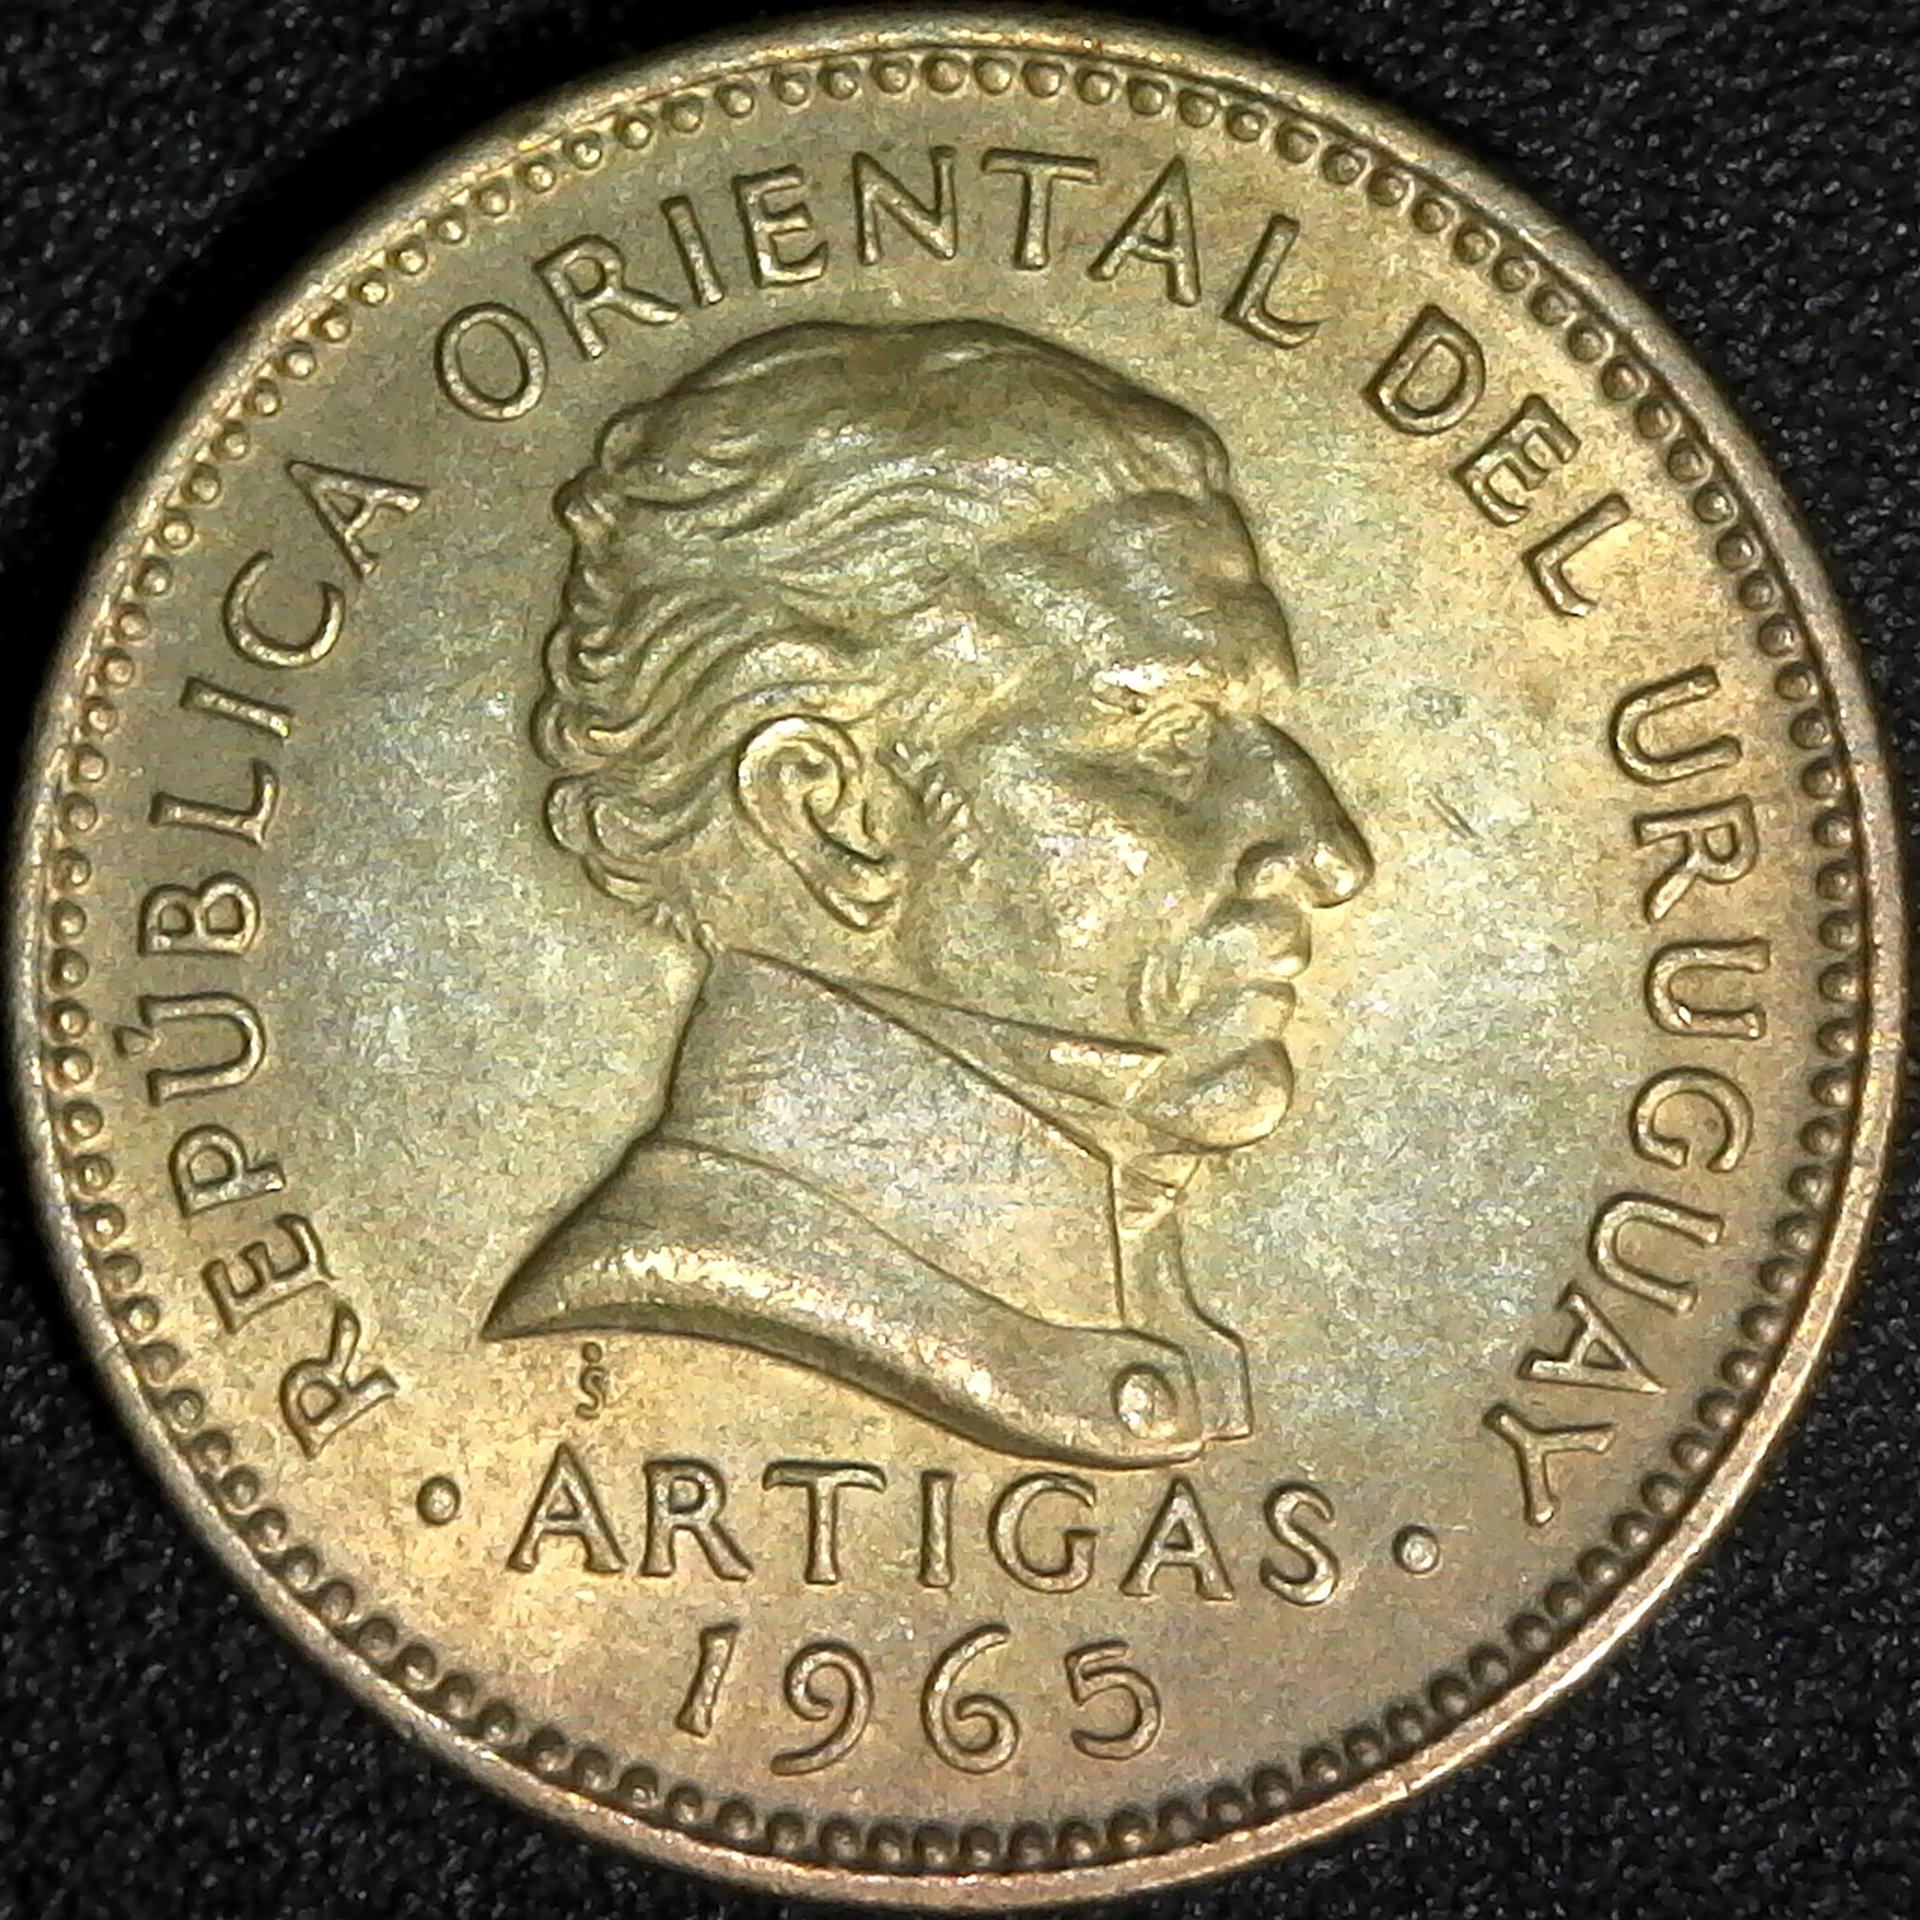 Uruguay 10 Pesos 1965 obv.jpg